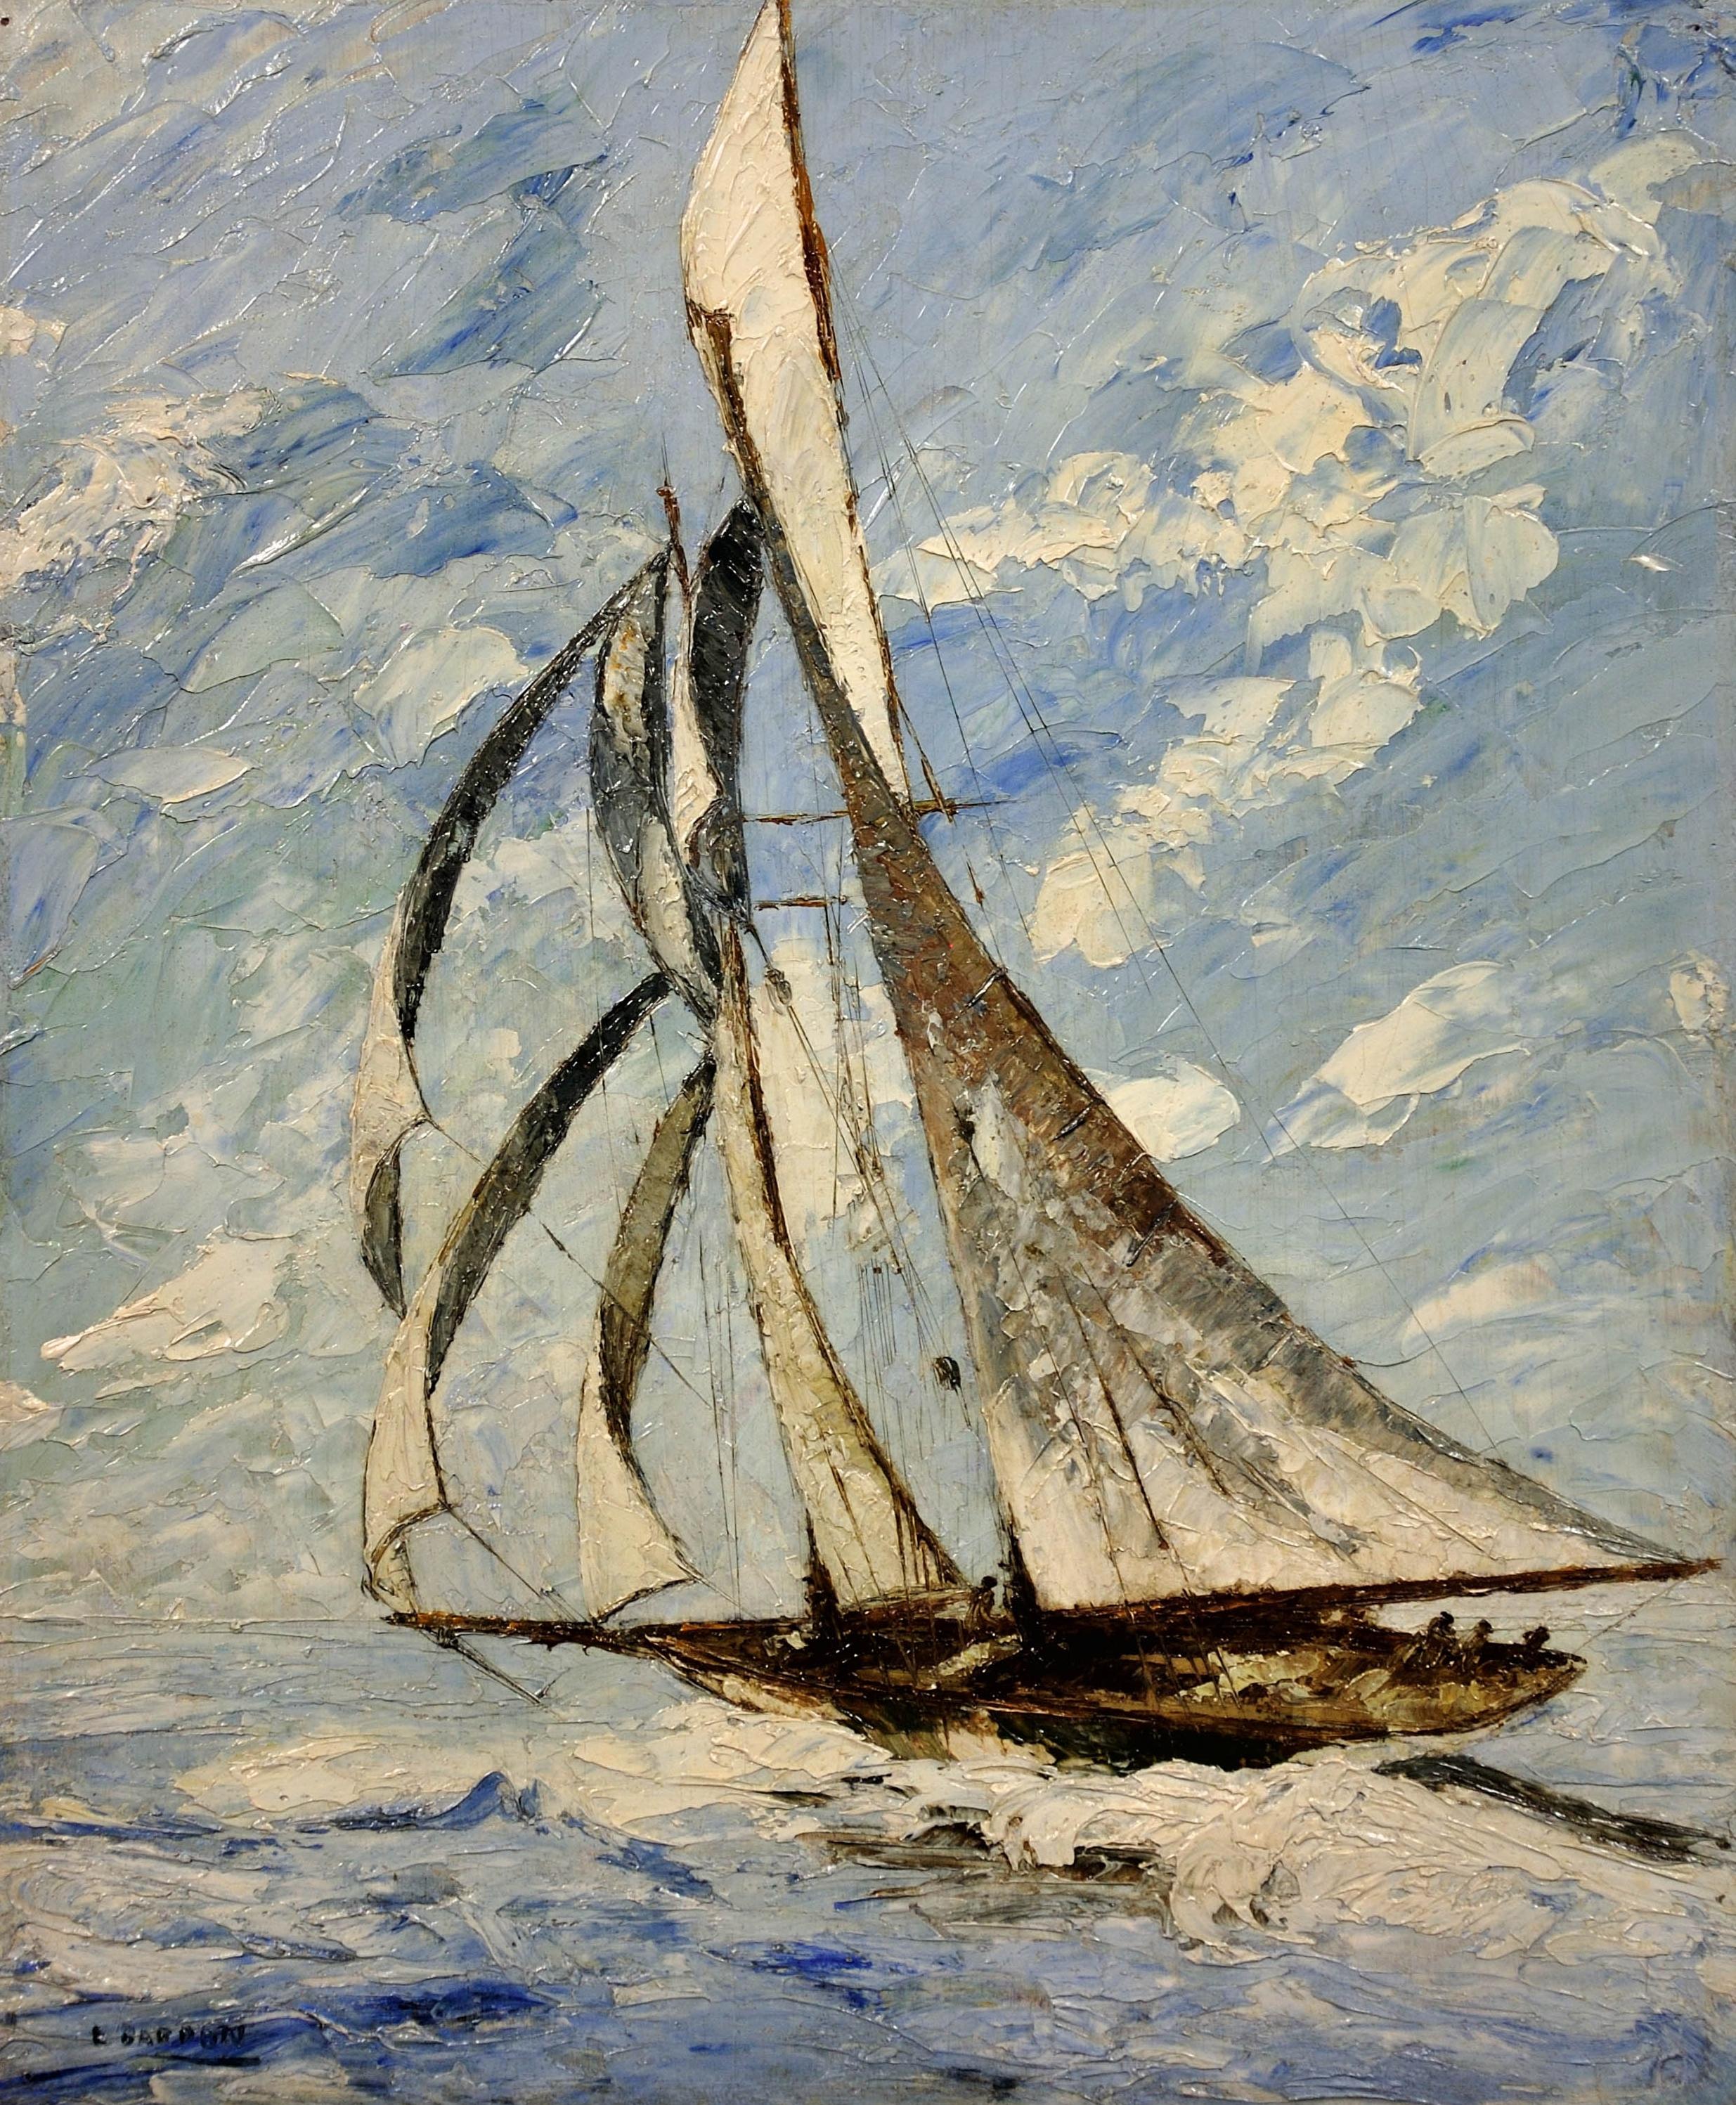 Ocean Gypsy. Sheets Down, Turning to Windward. 1930s Yachting Sailing Decadence. - Painting by Elisabeth Bardon